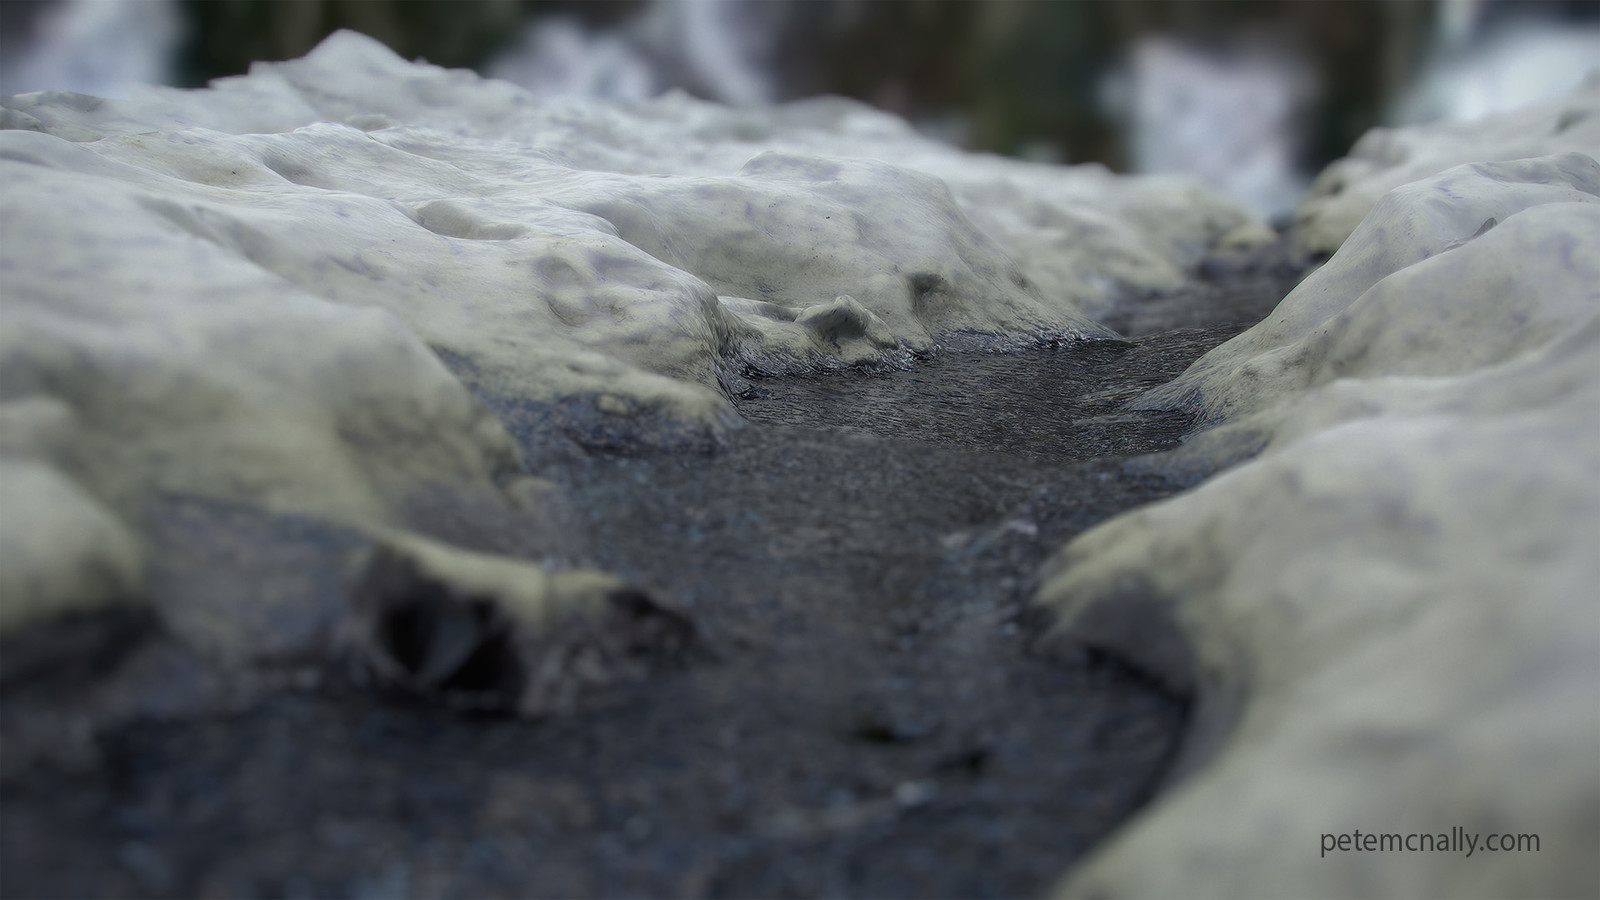 Slushy melting snow 02
Toolbag 3 render